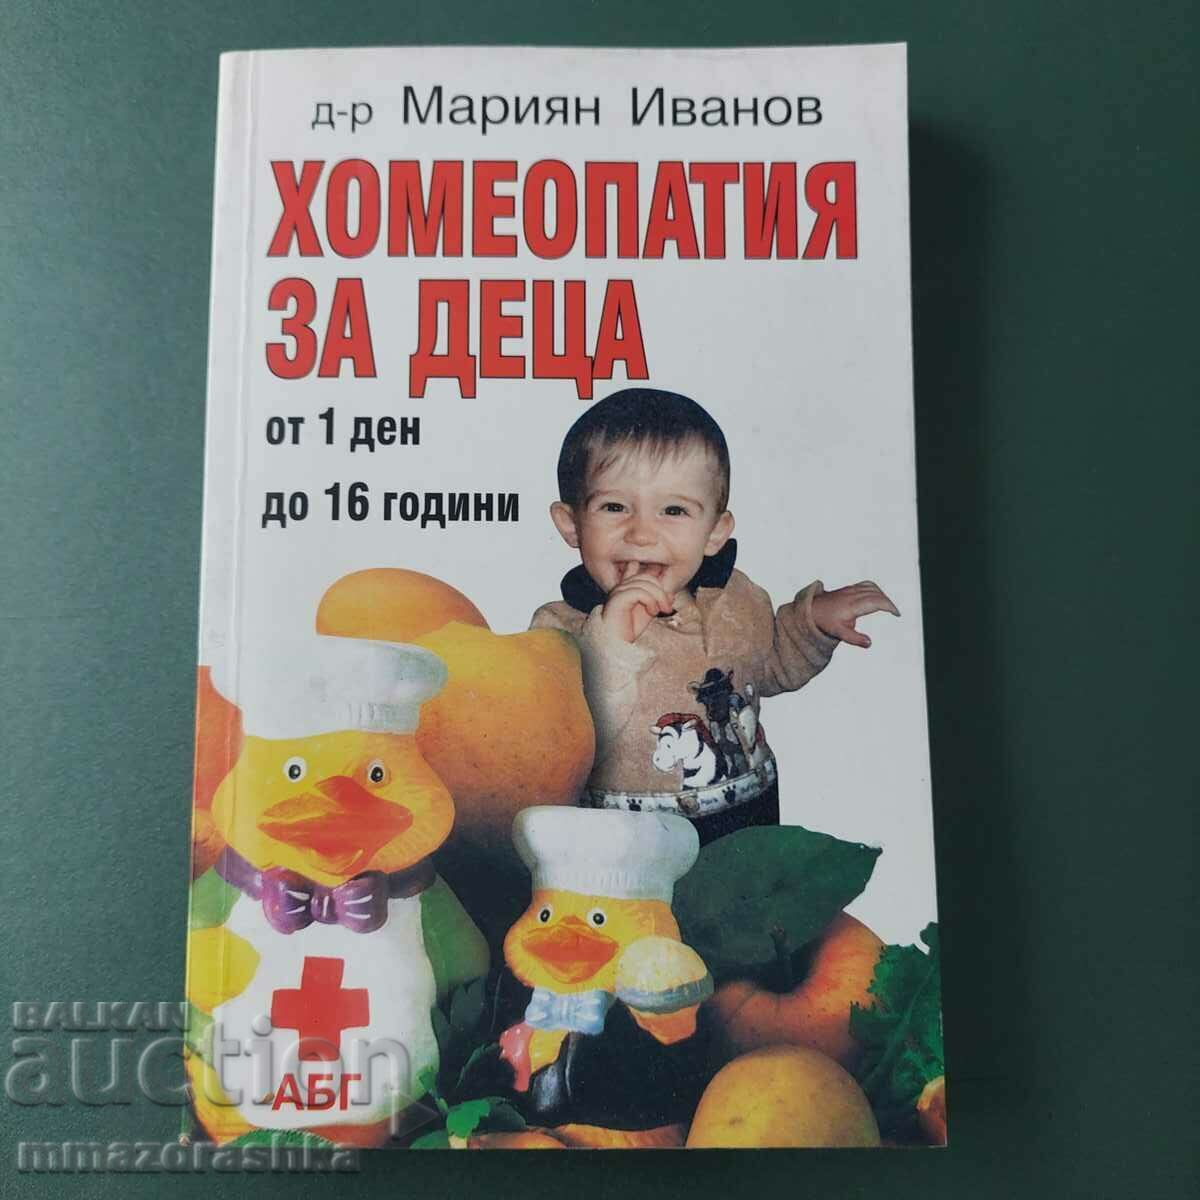 Homeopathy for children, Dr. Marijan Ivanov